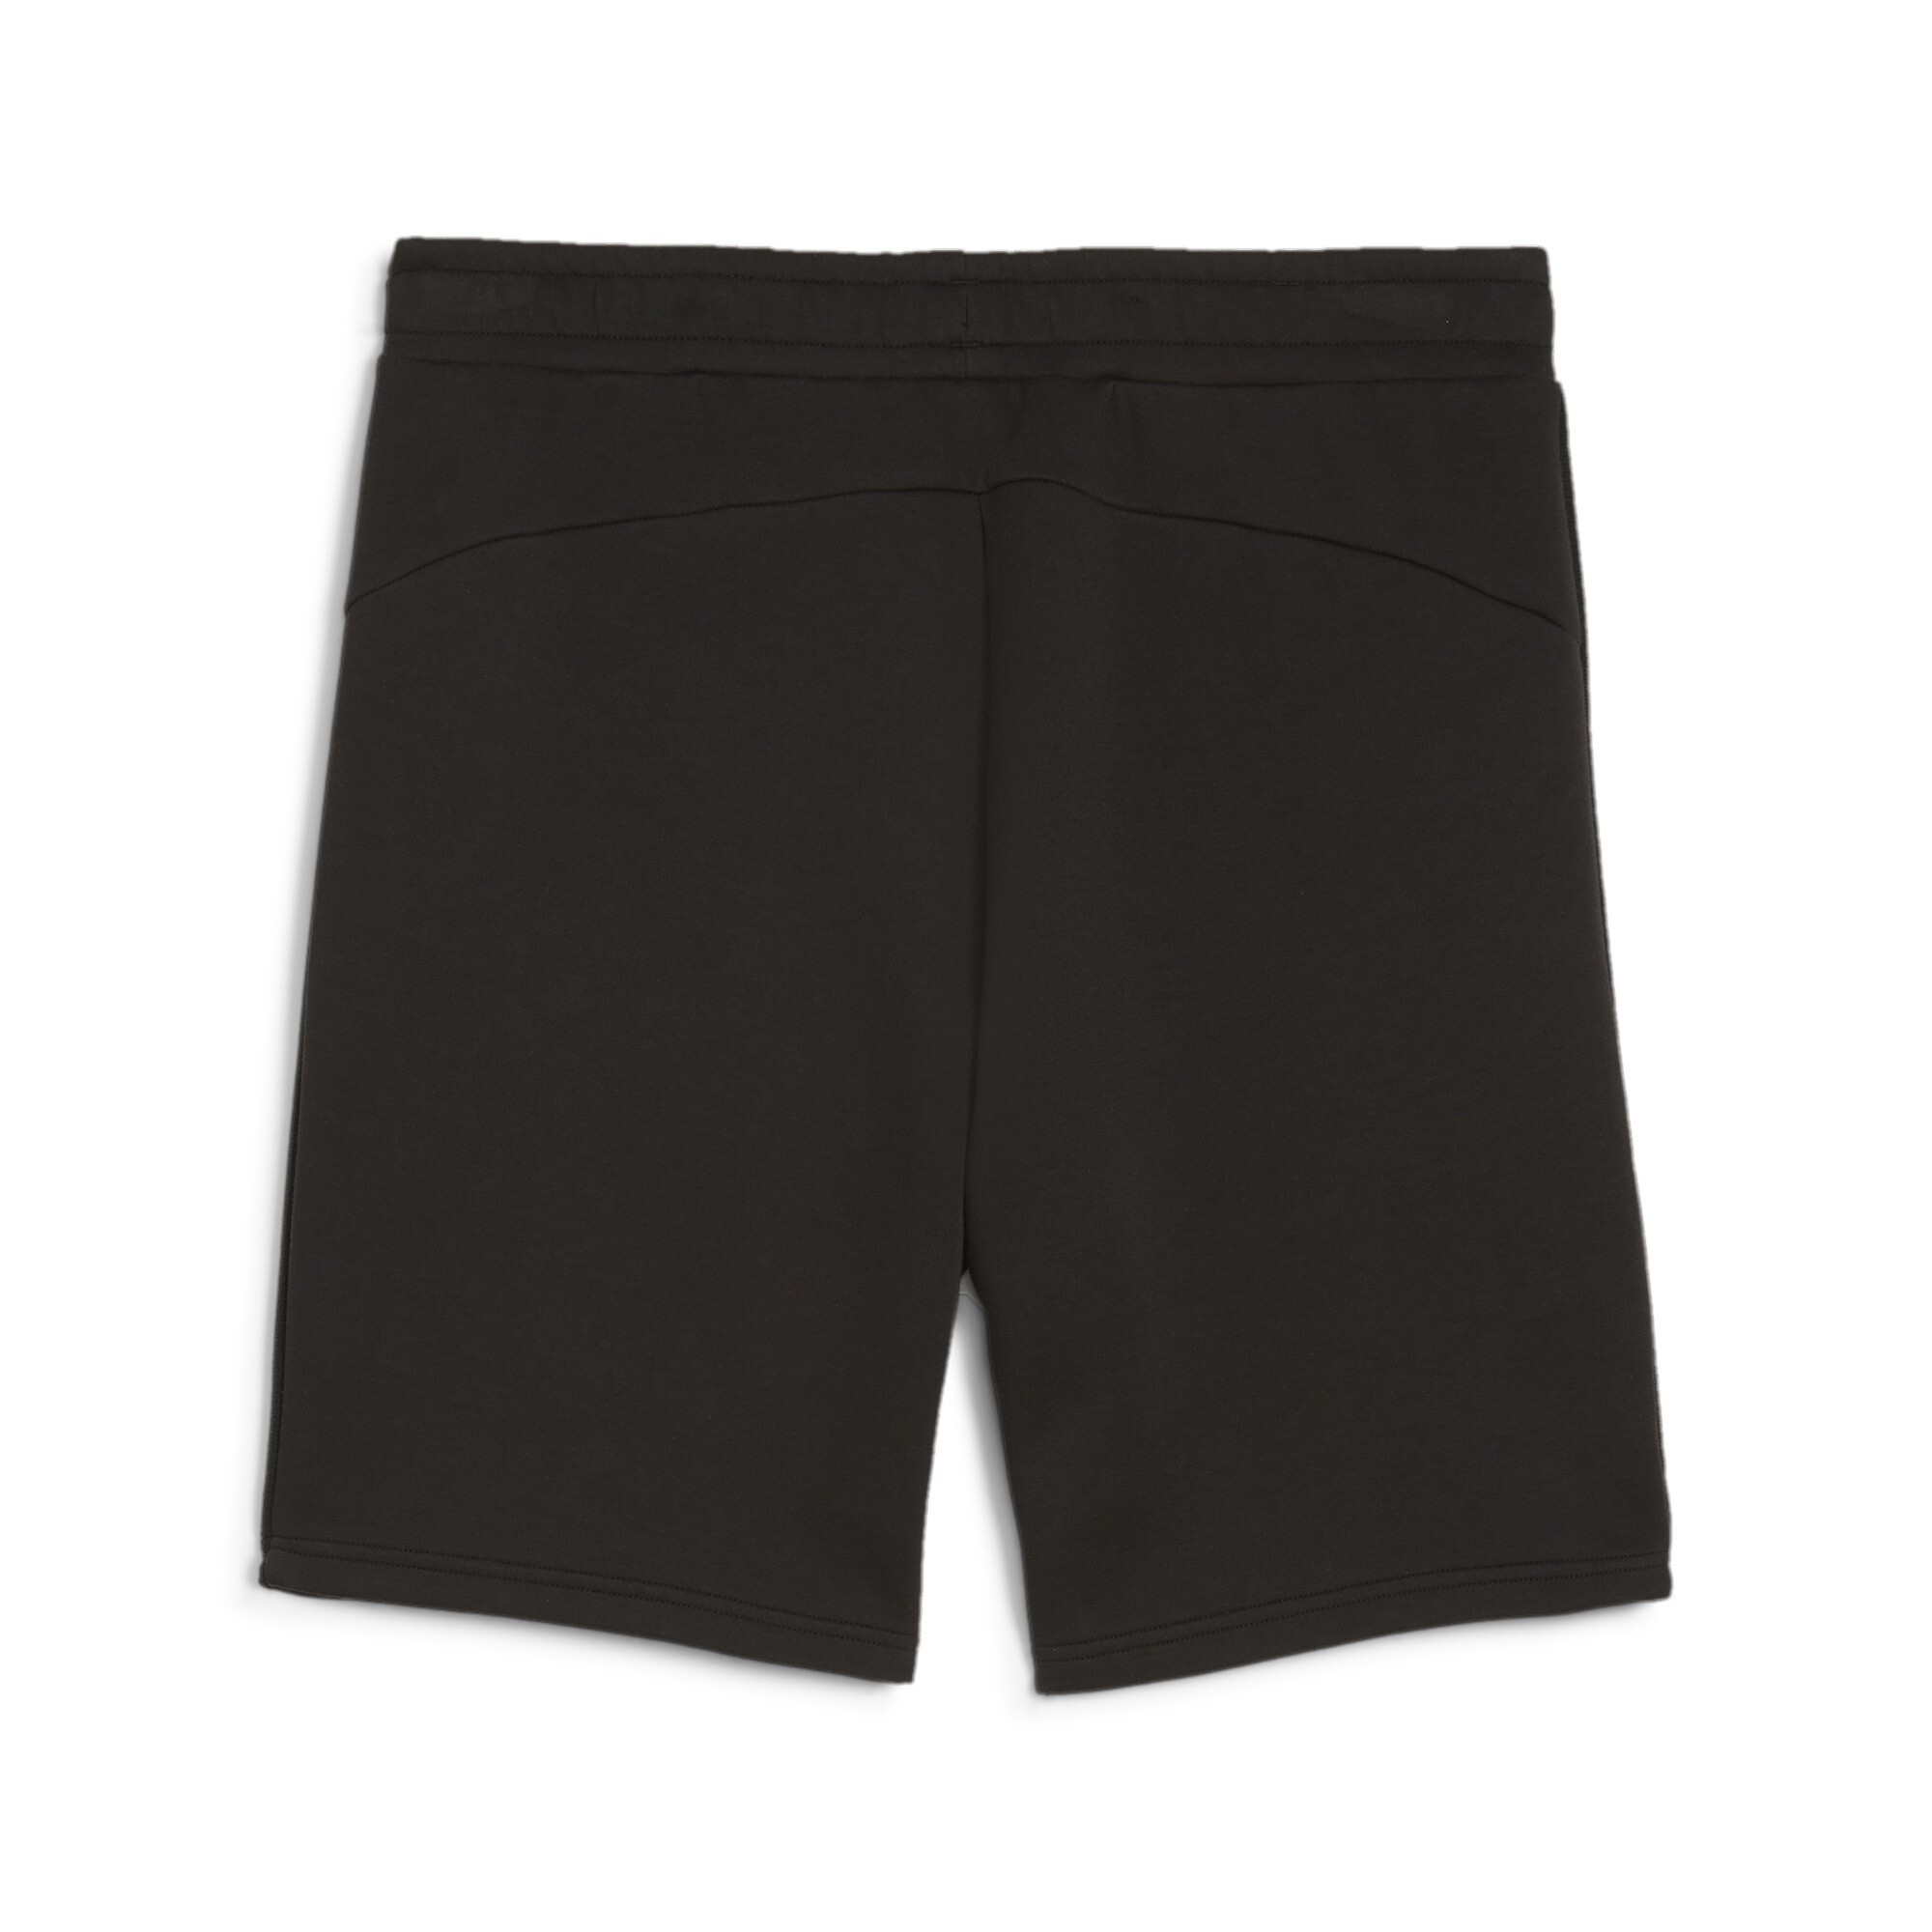 Men's PUMA EVOSTRIPE Shorts In Black, Size Large